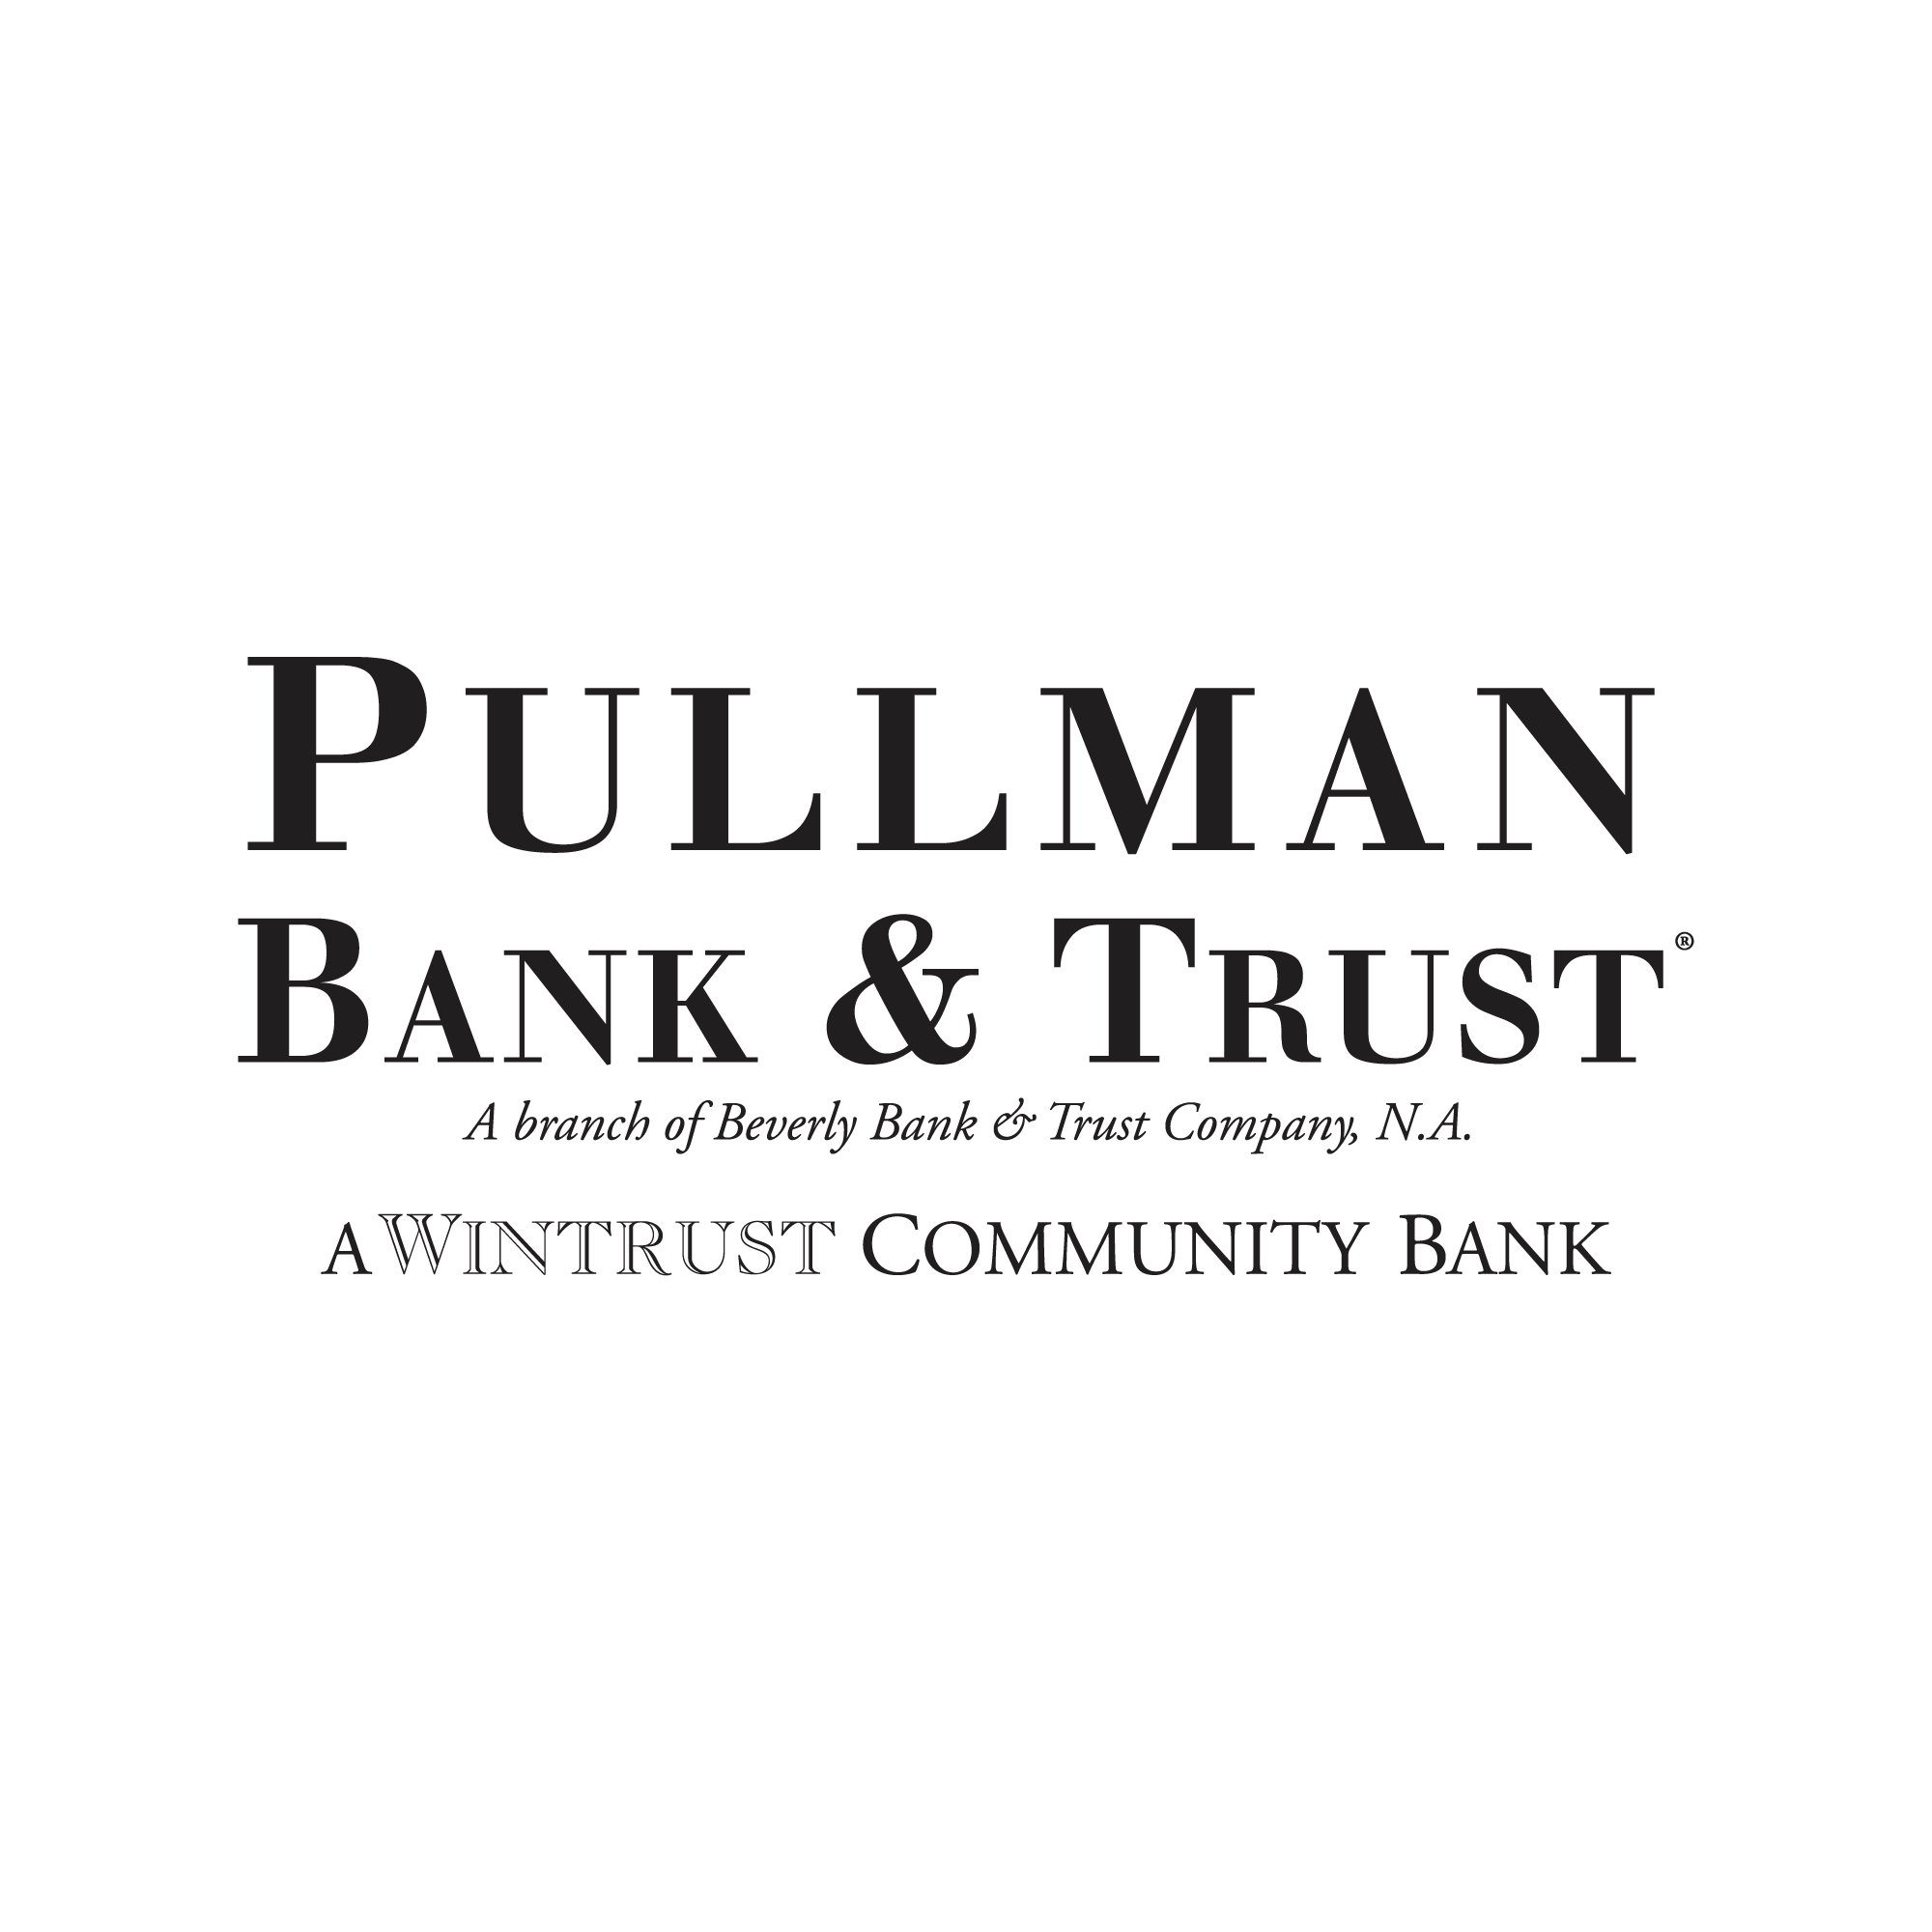 Pullman Bank & Trust